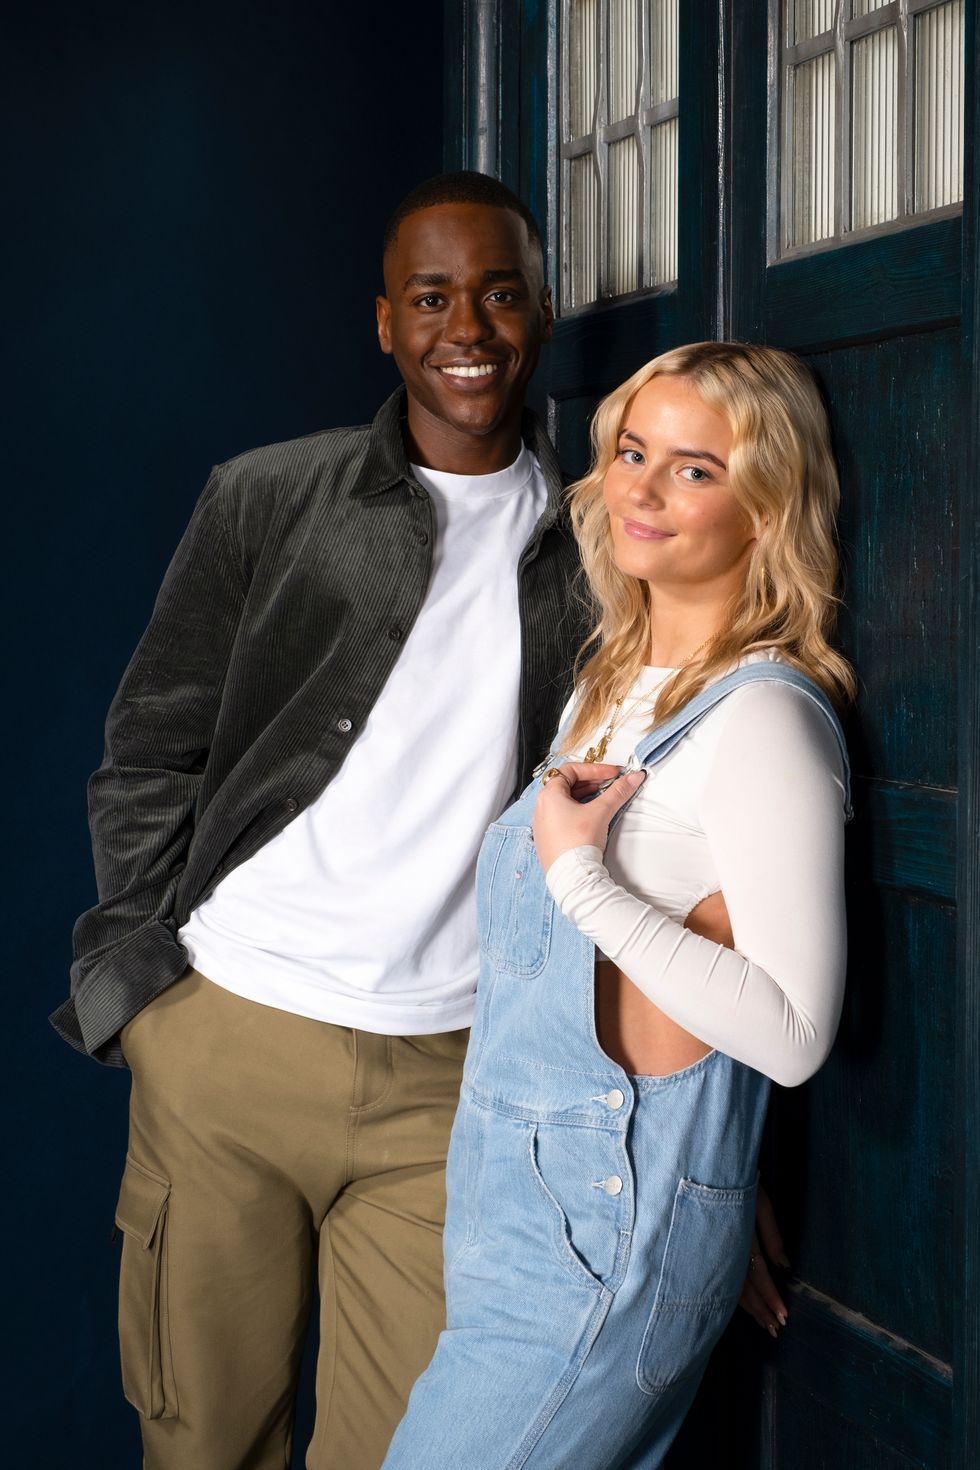 Doctor protagonizado por Ncuti Gatwa y Millie Gibson.